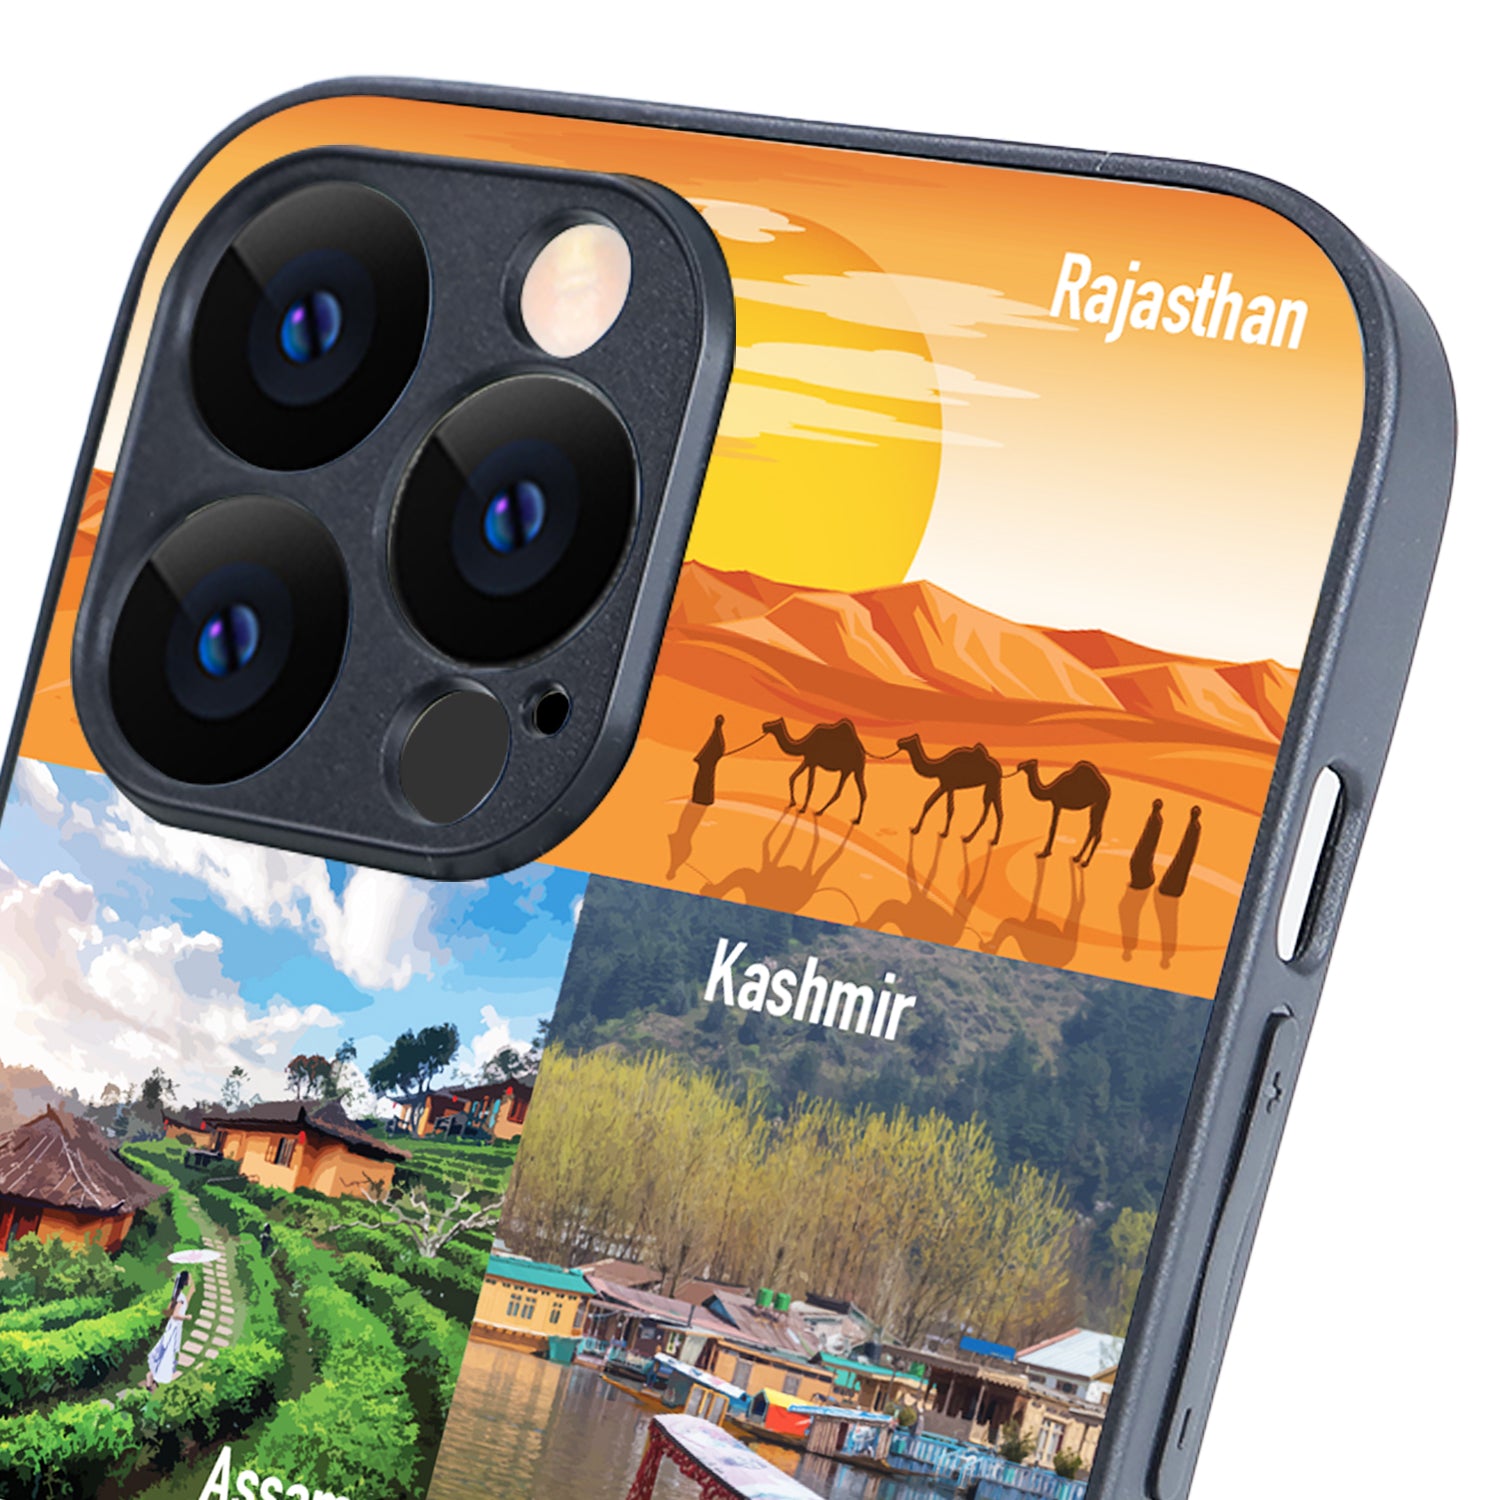 Banjara Travel iPhone 13 Pro Max Case